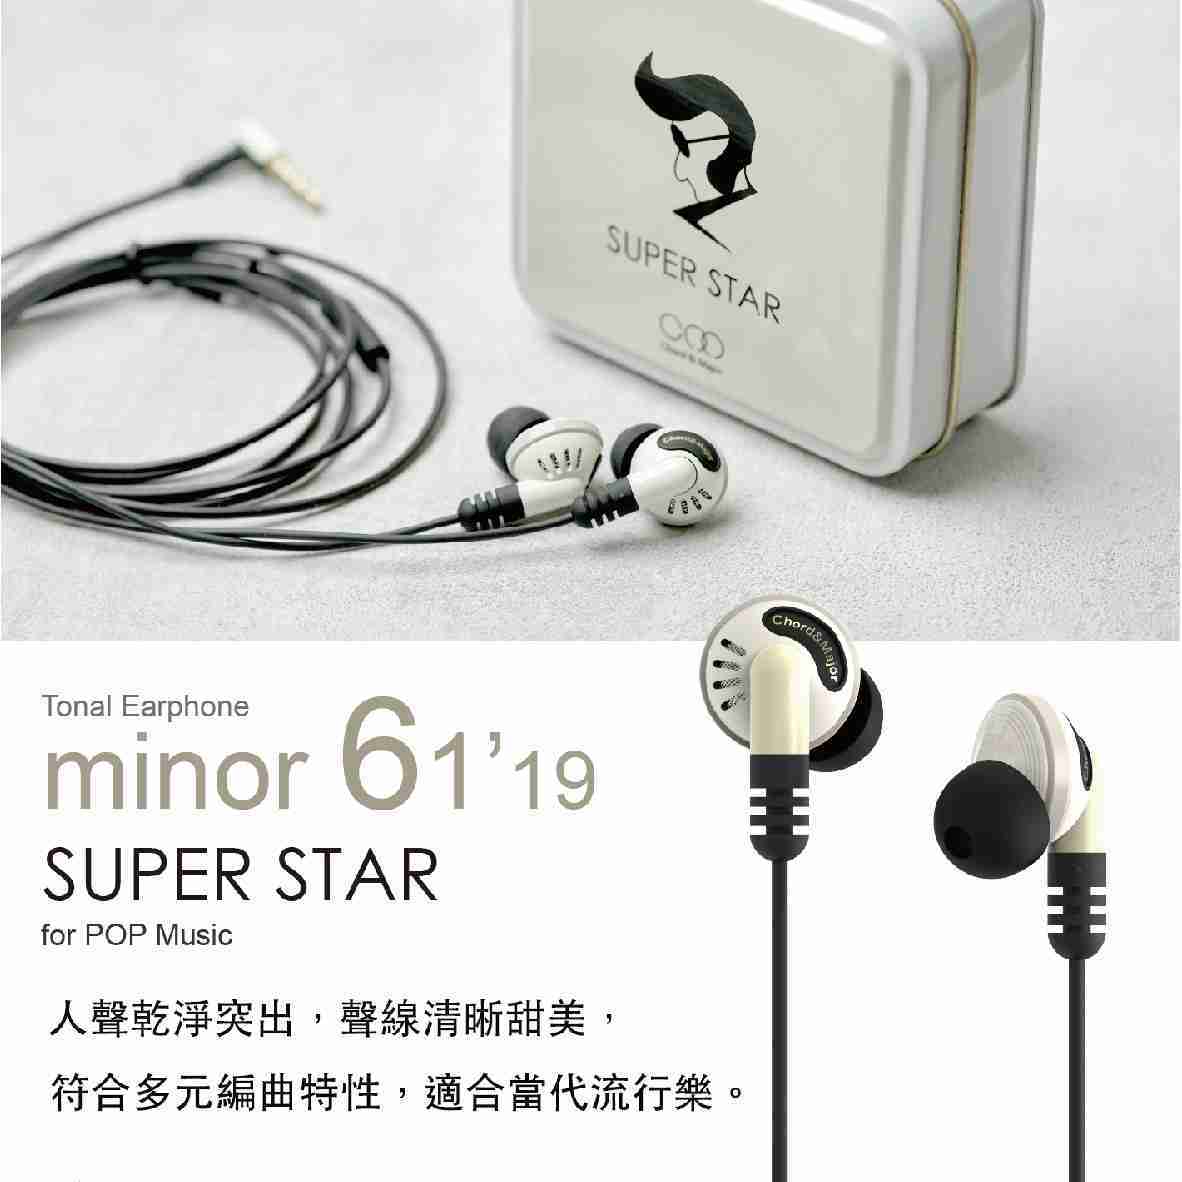 Chord & Major 小調性耳機 minor series 便攜 通話 耳道式耳機 | My Ear 耳機專門店